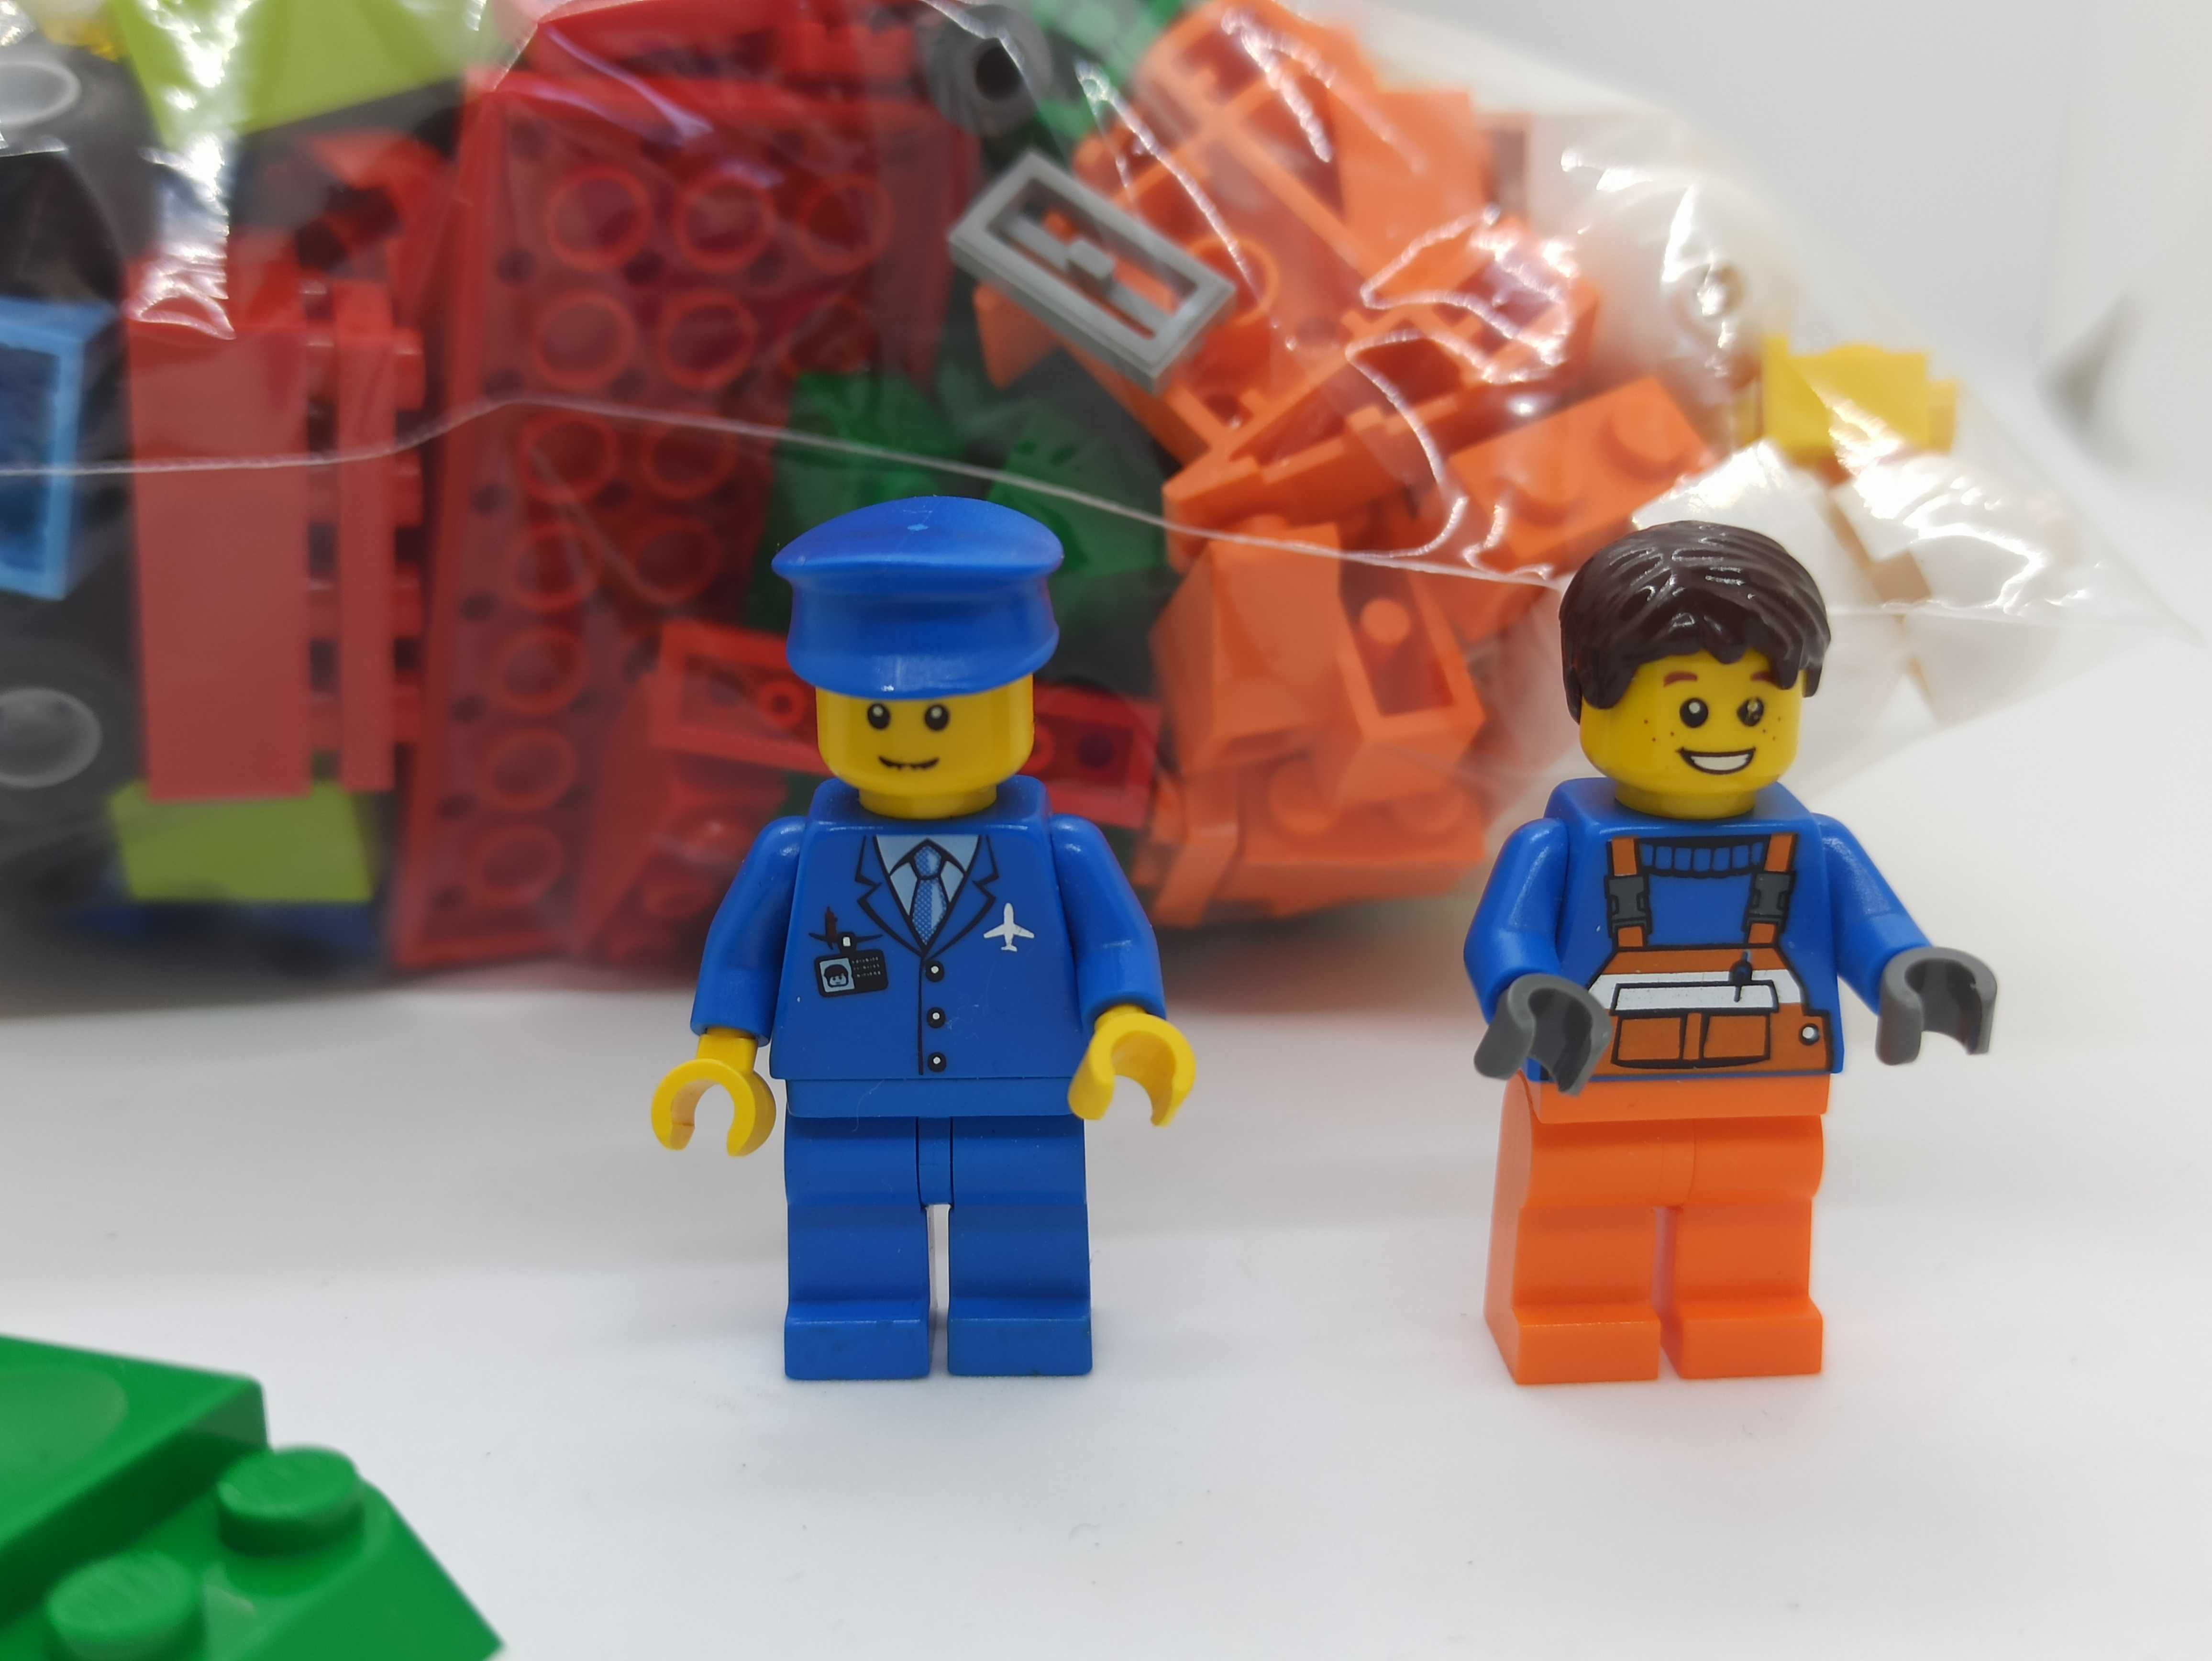 Lego 5933 Airport Building Set Creator